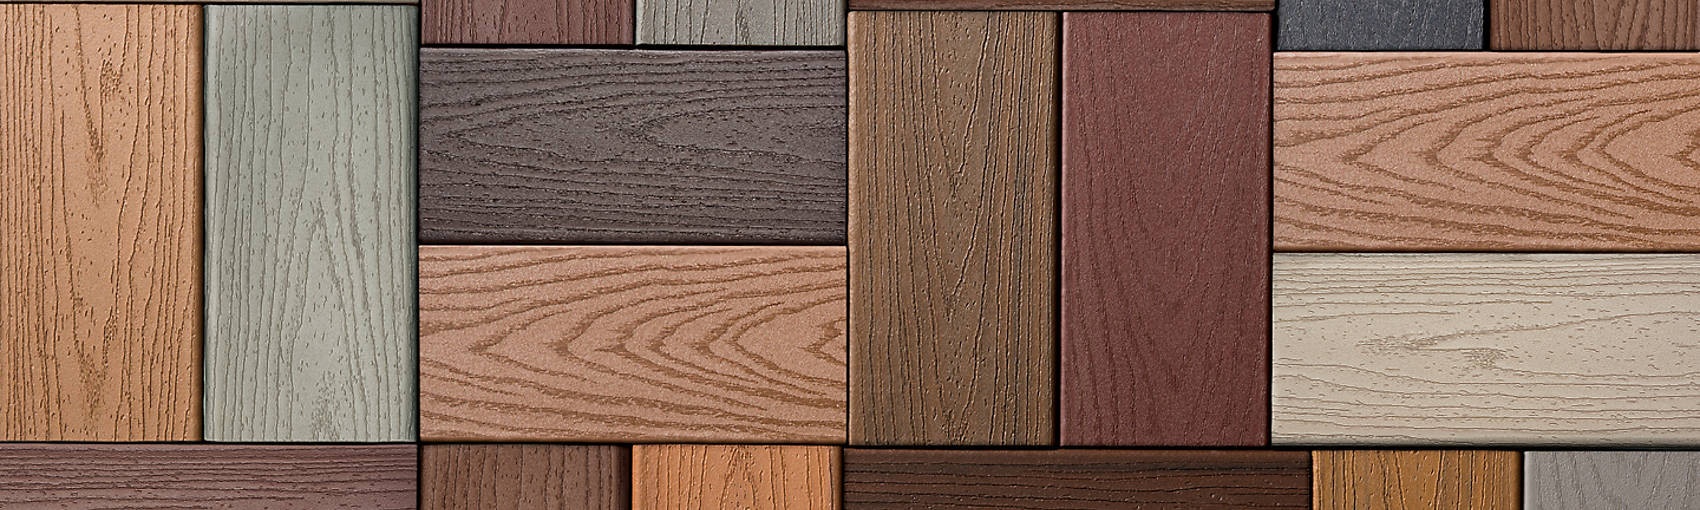 14 Stylish Denver Hardwood Floor Refinishing Cost 2023 free download denver hardwood floor refinishing cost of composite decking composite deck materials trex regarding trex color selector hero 2